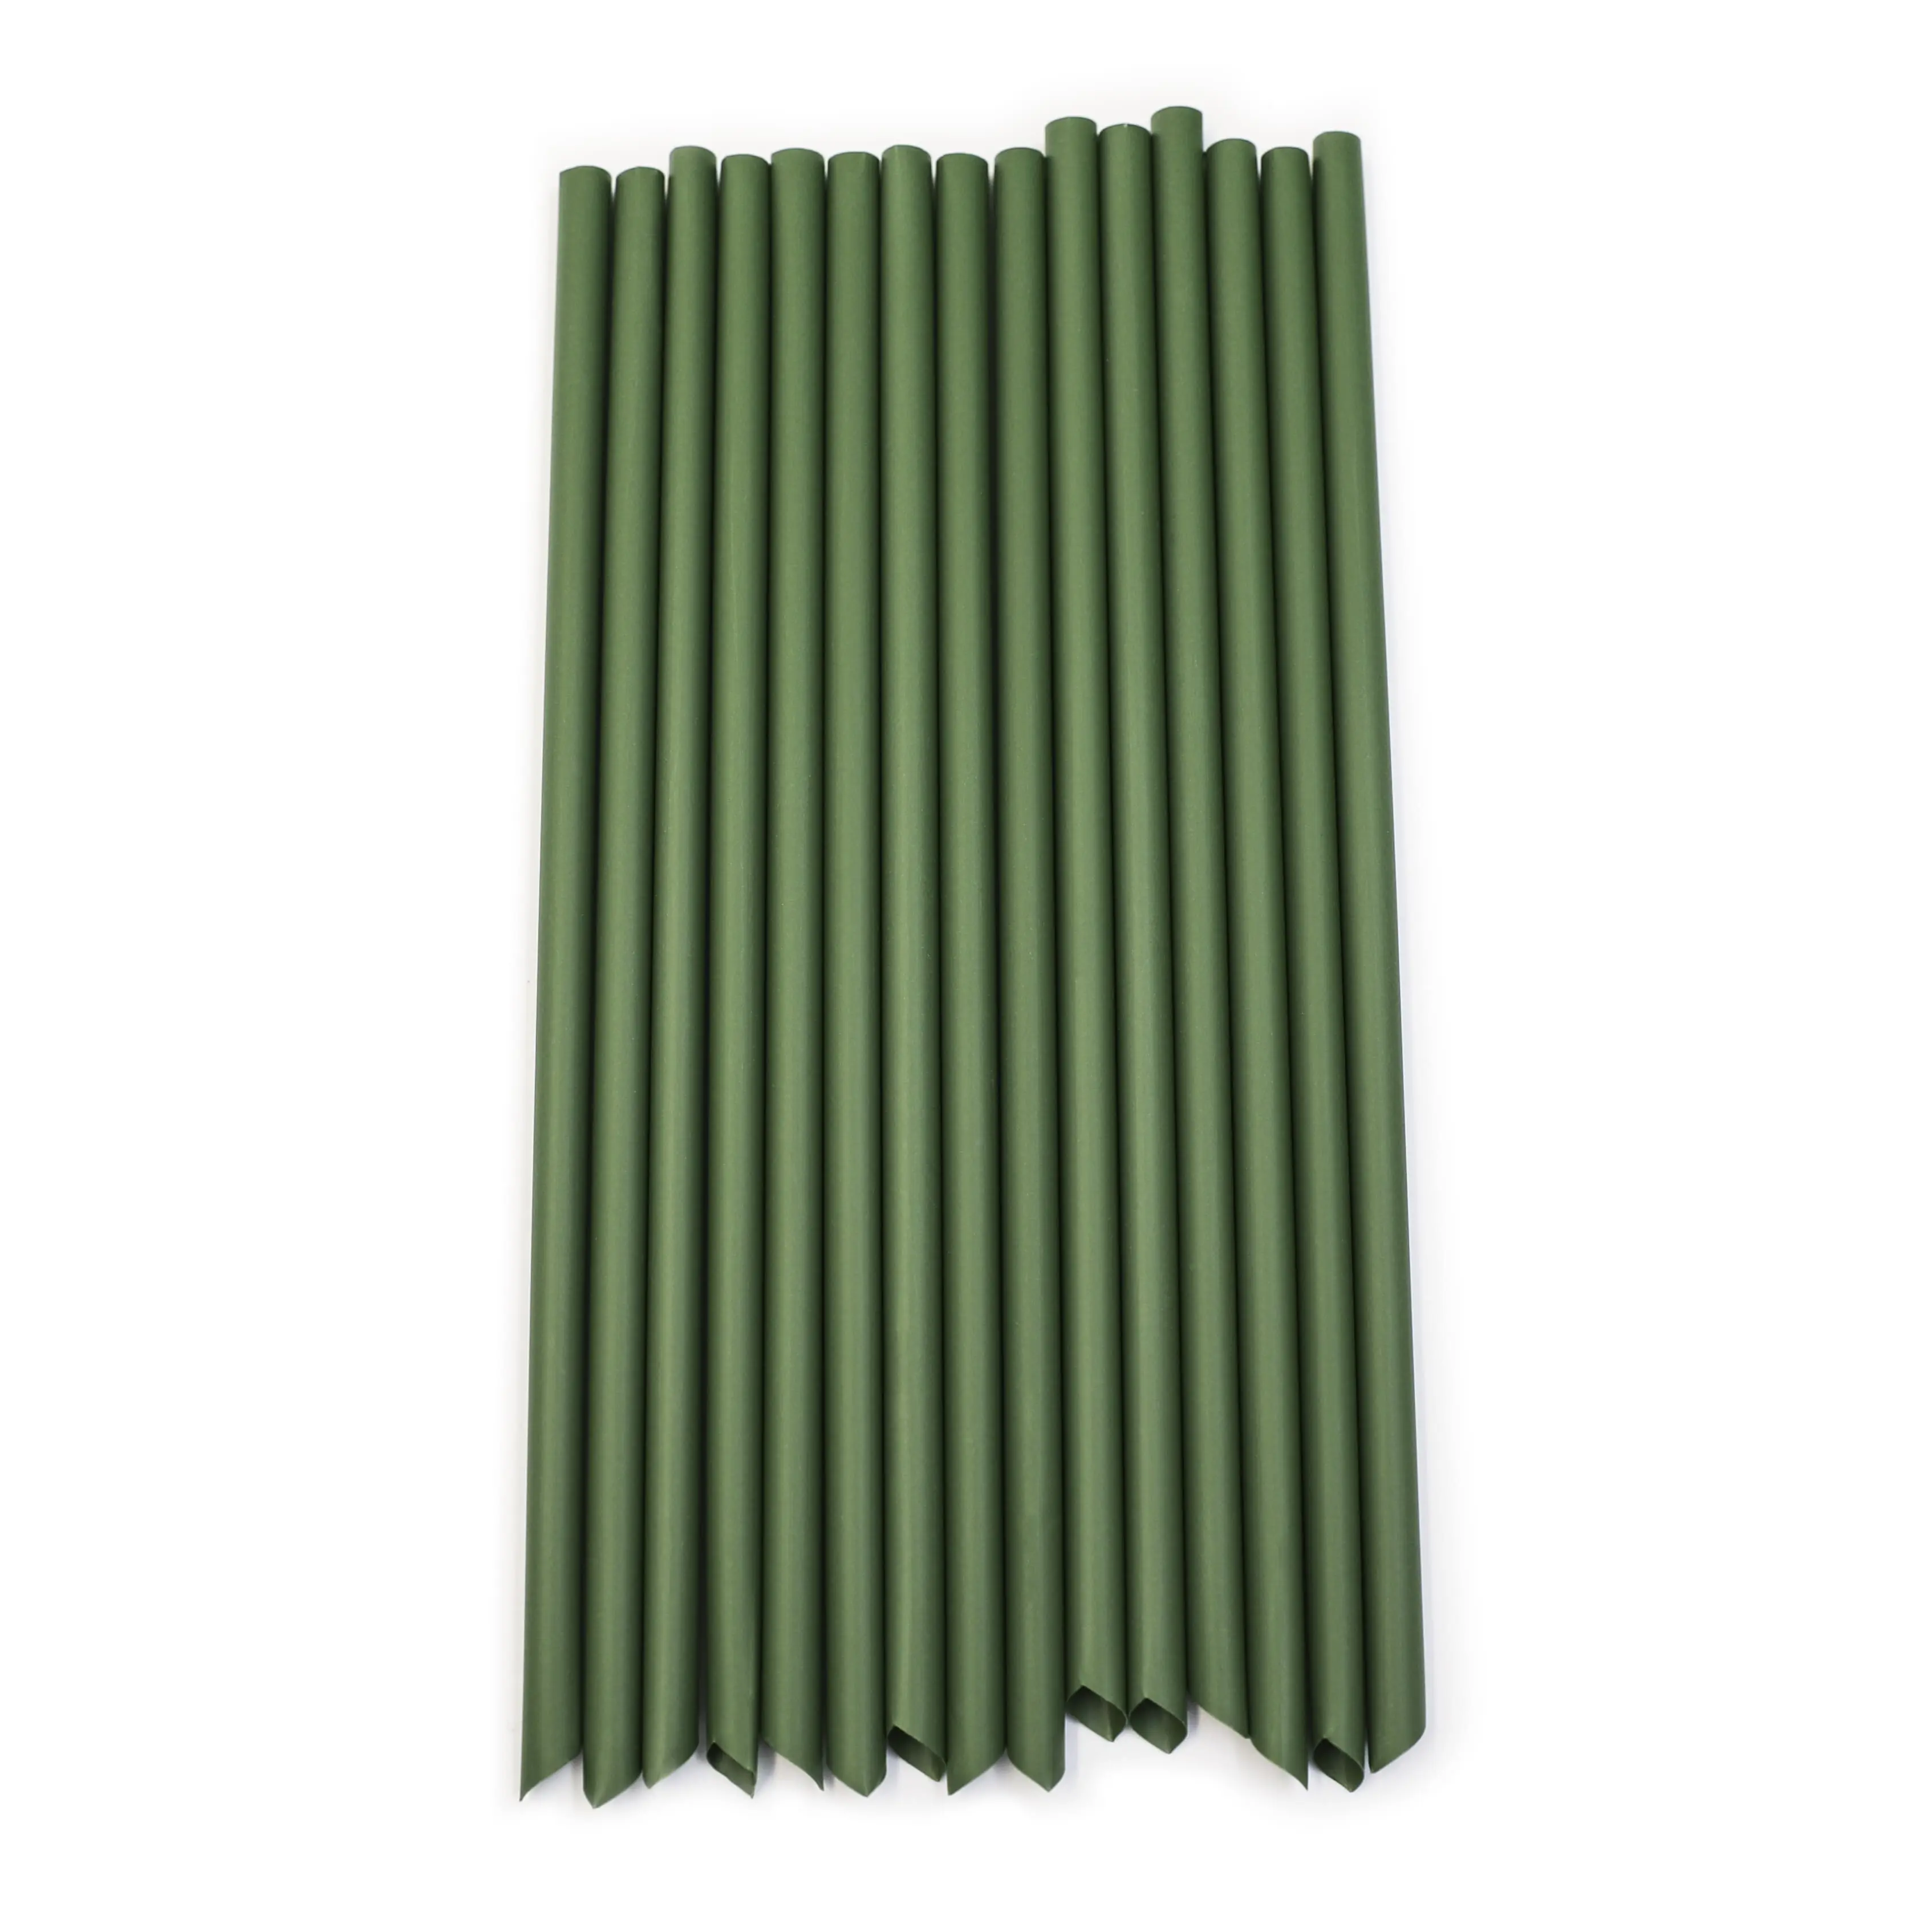 Buy Custom Printed Earth Friendly Green Straws in Bulk